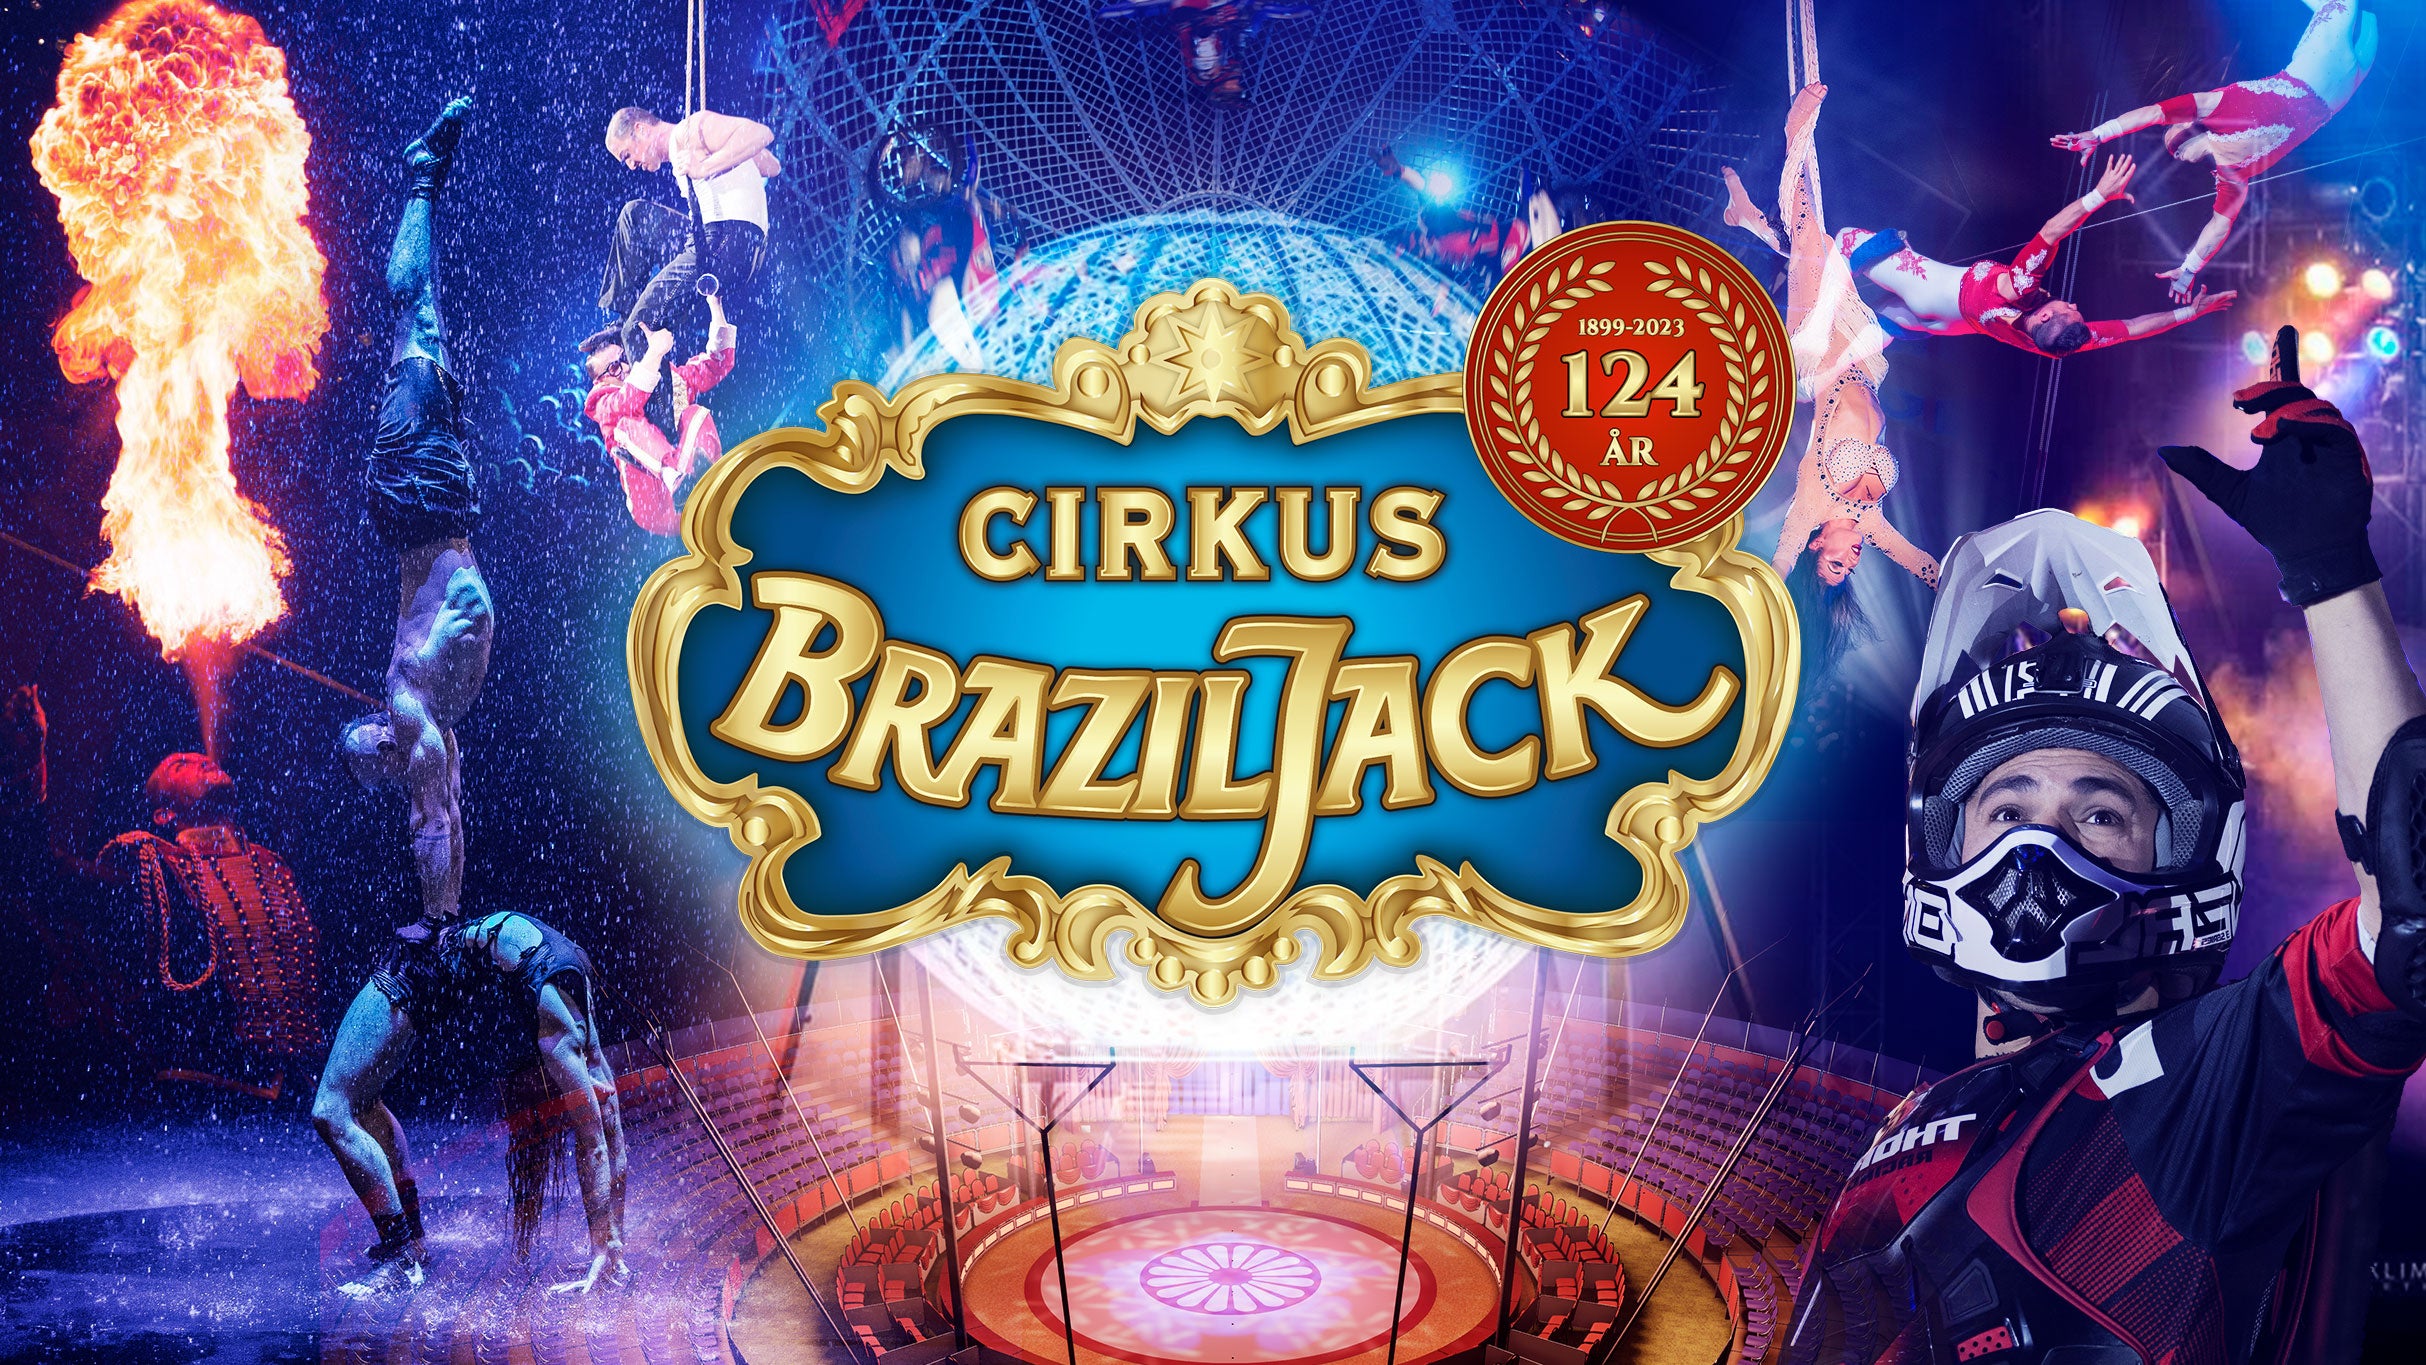 Cirkus Brazil Jack presale information on freepresalepasswords.com